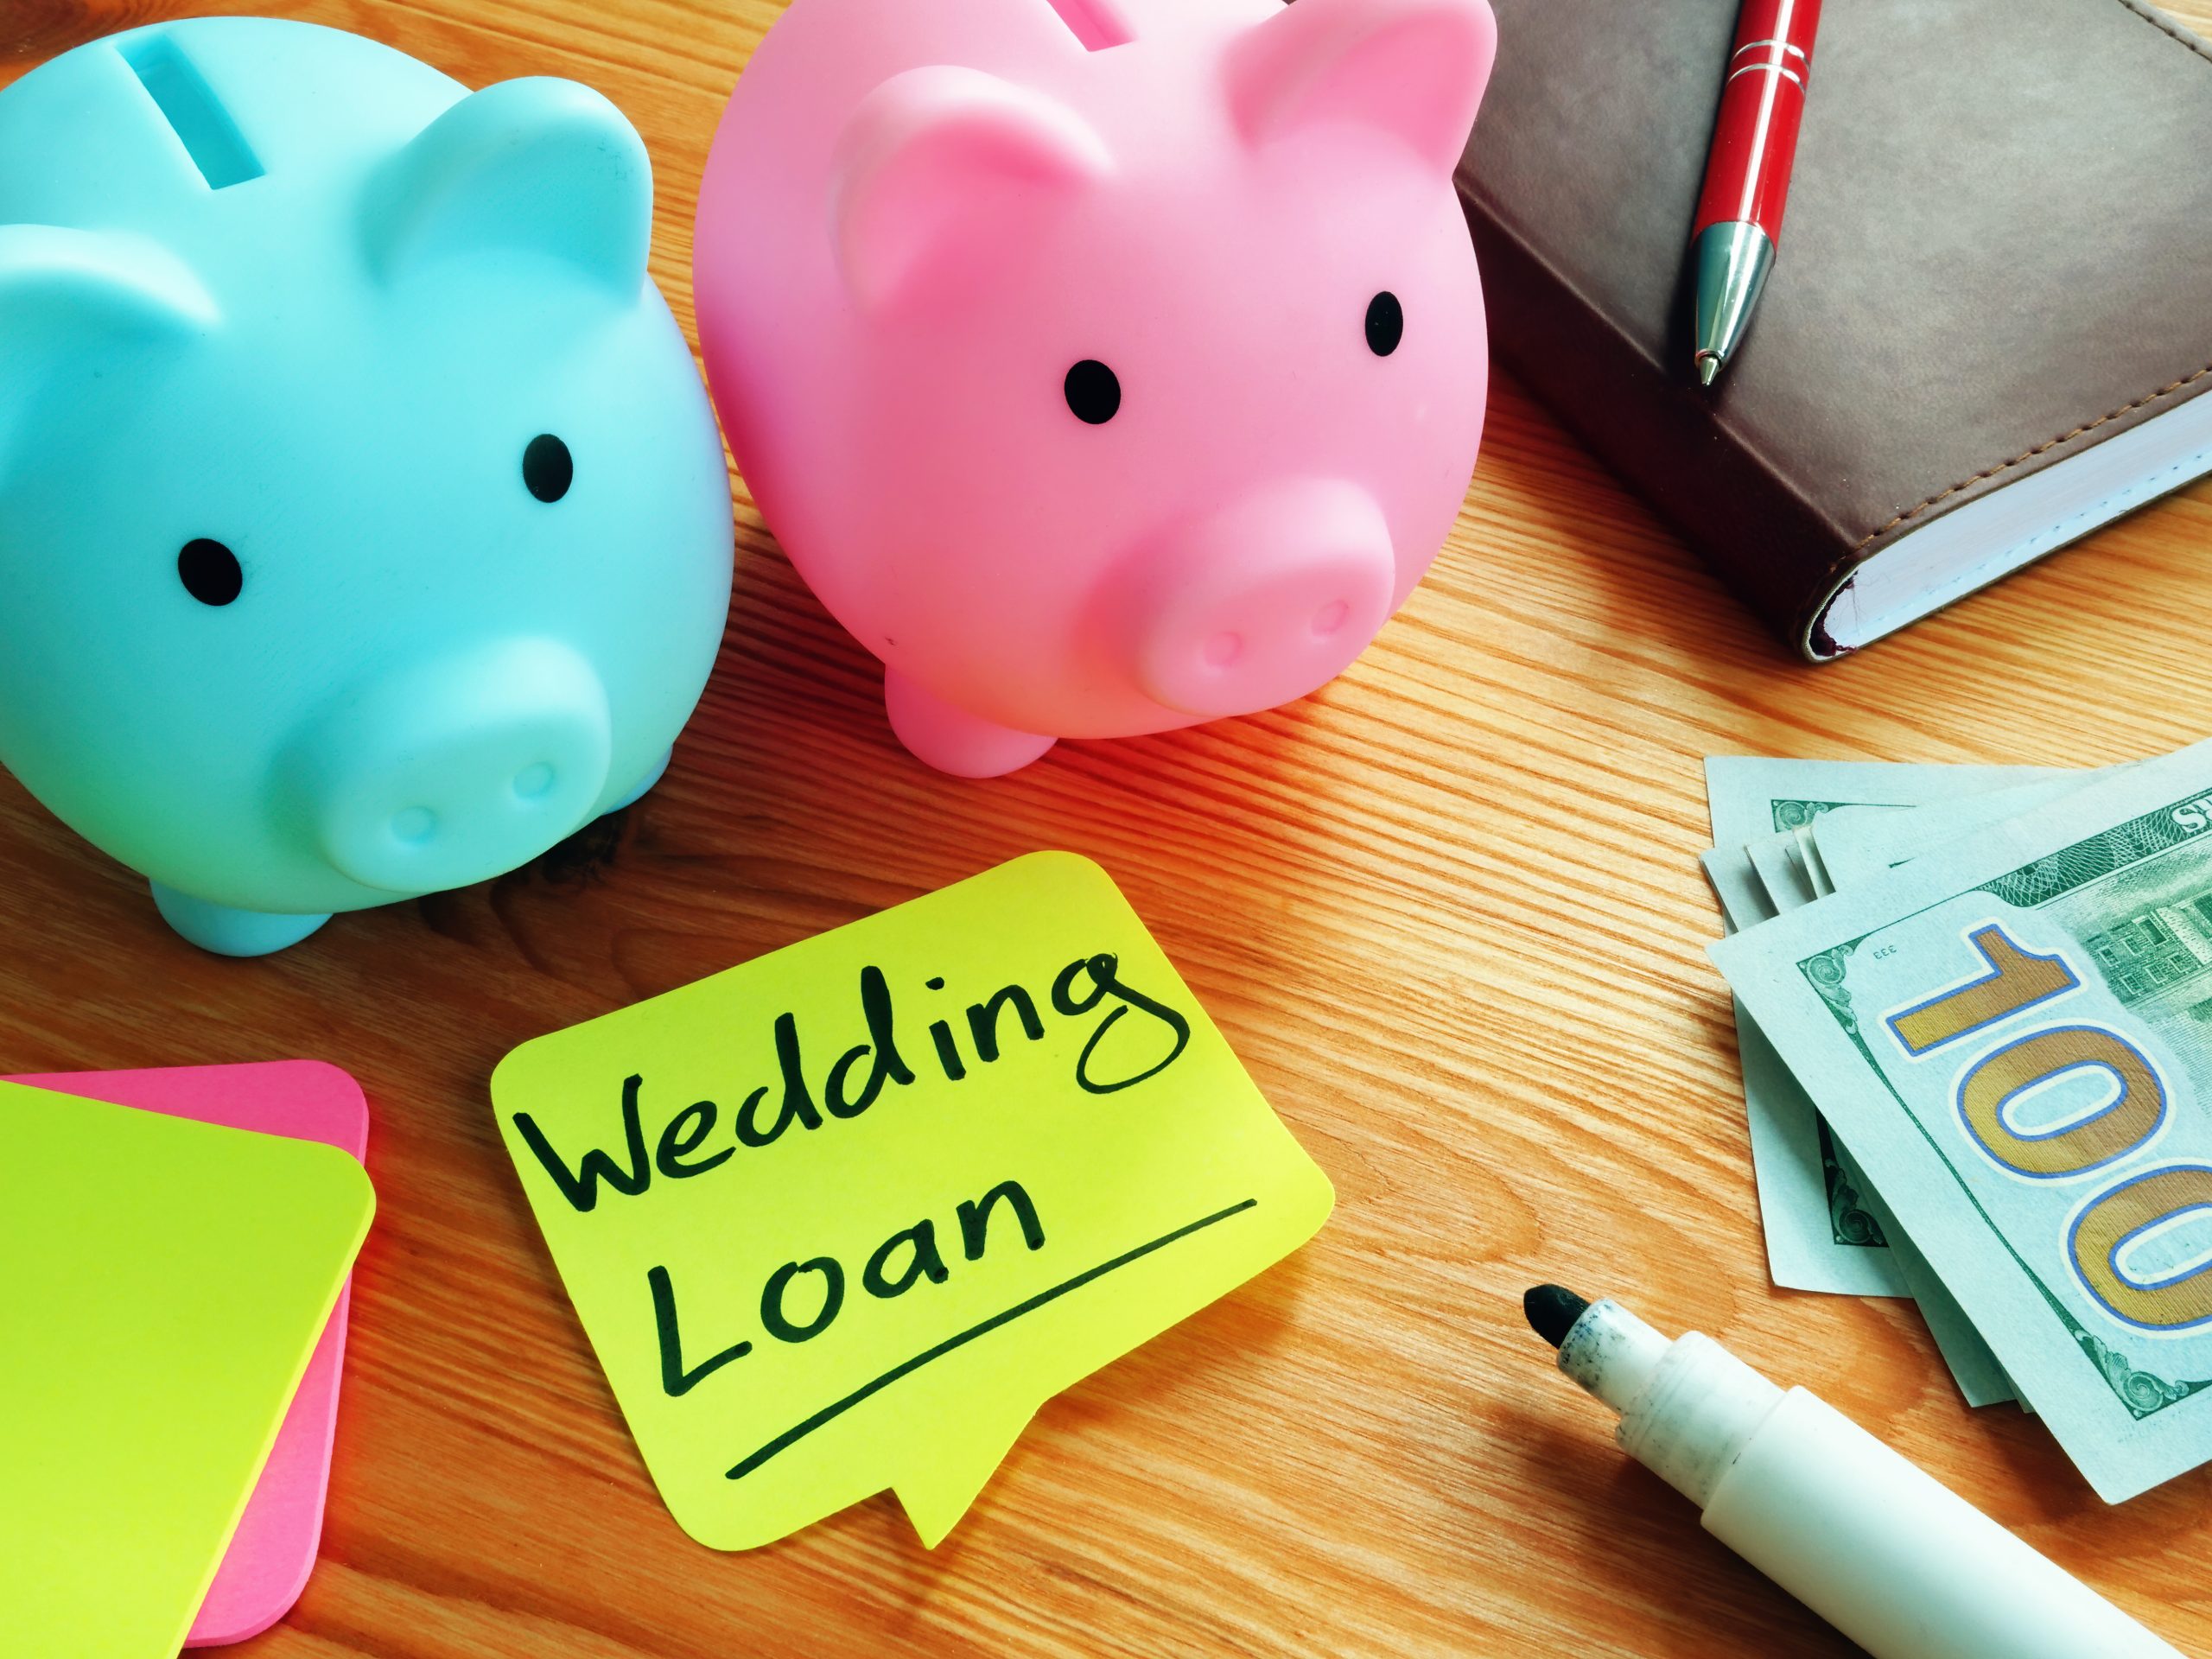 Wedding Loan memo and two piggy banks.